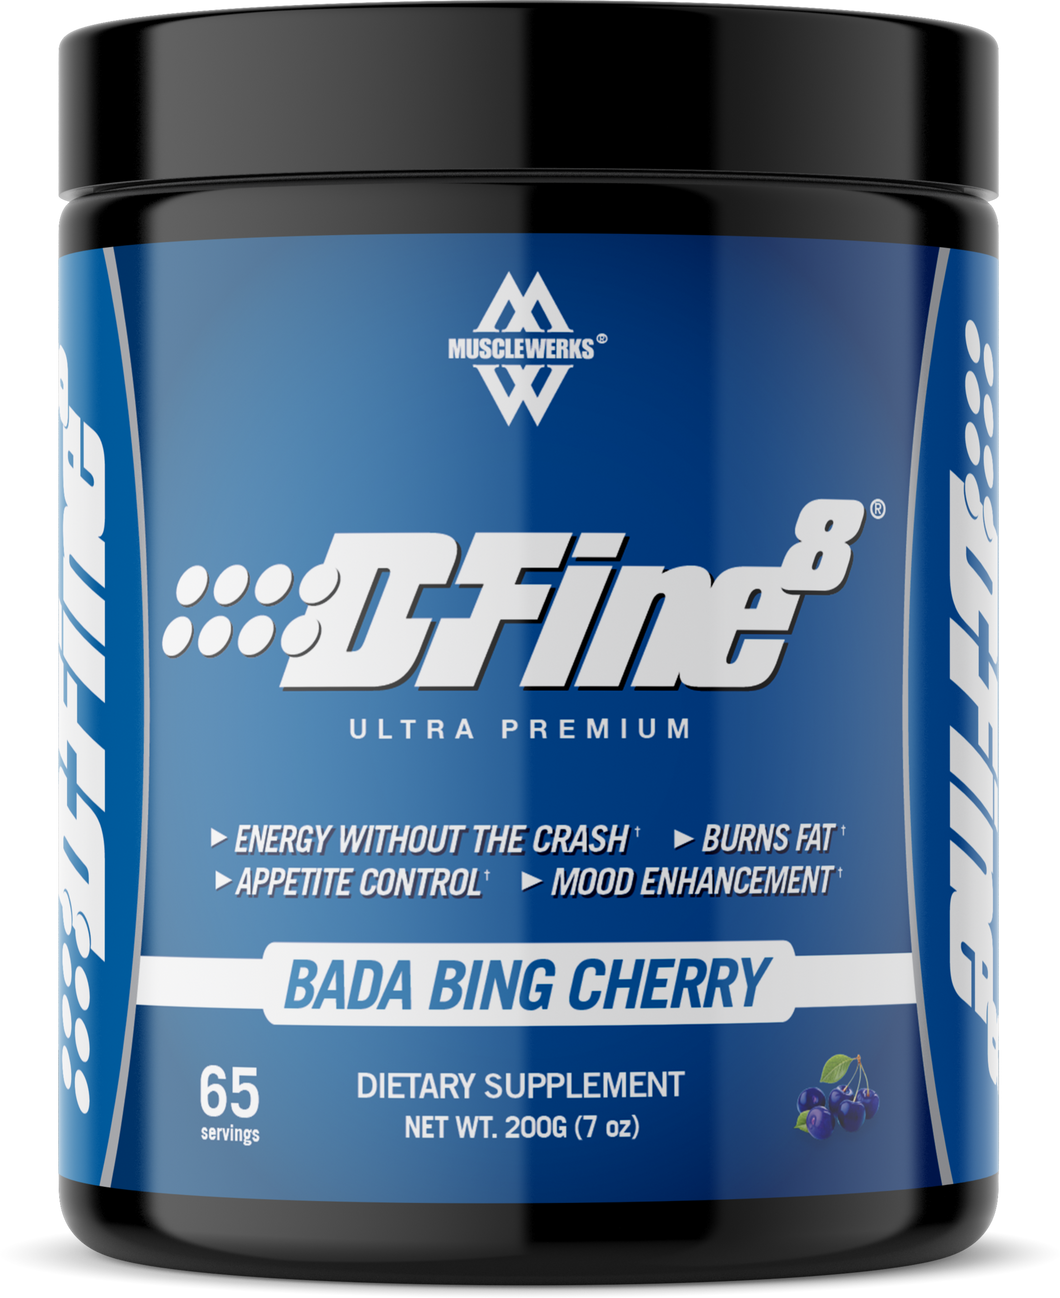 D-Fine8 Bada Bing Cherry